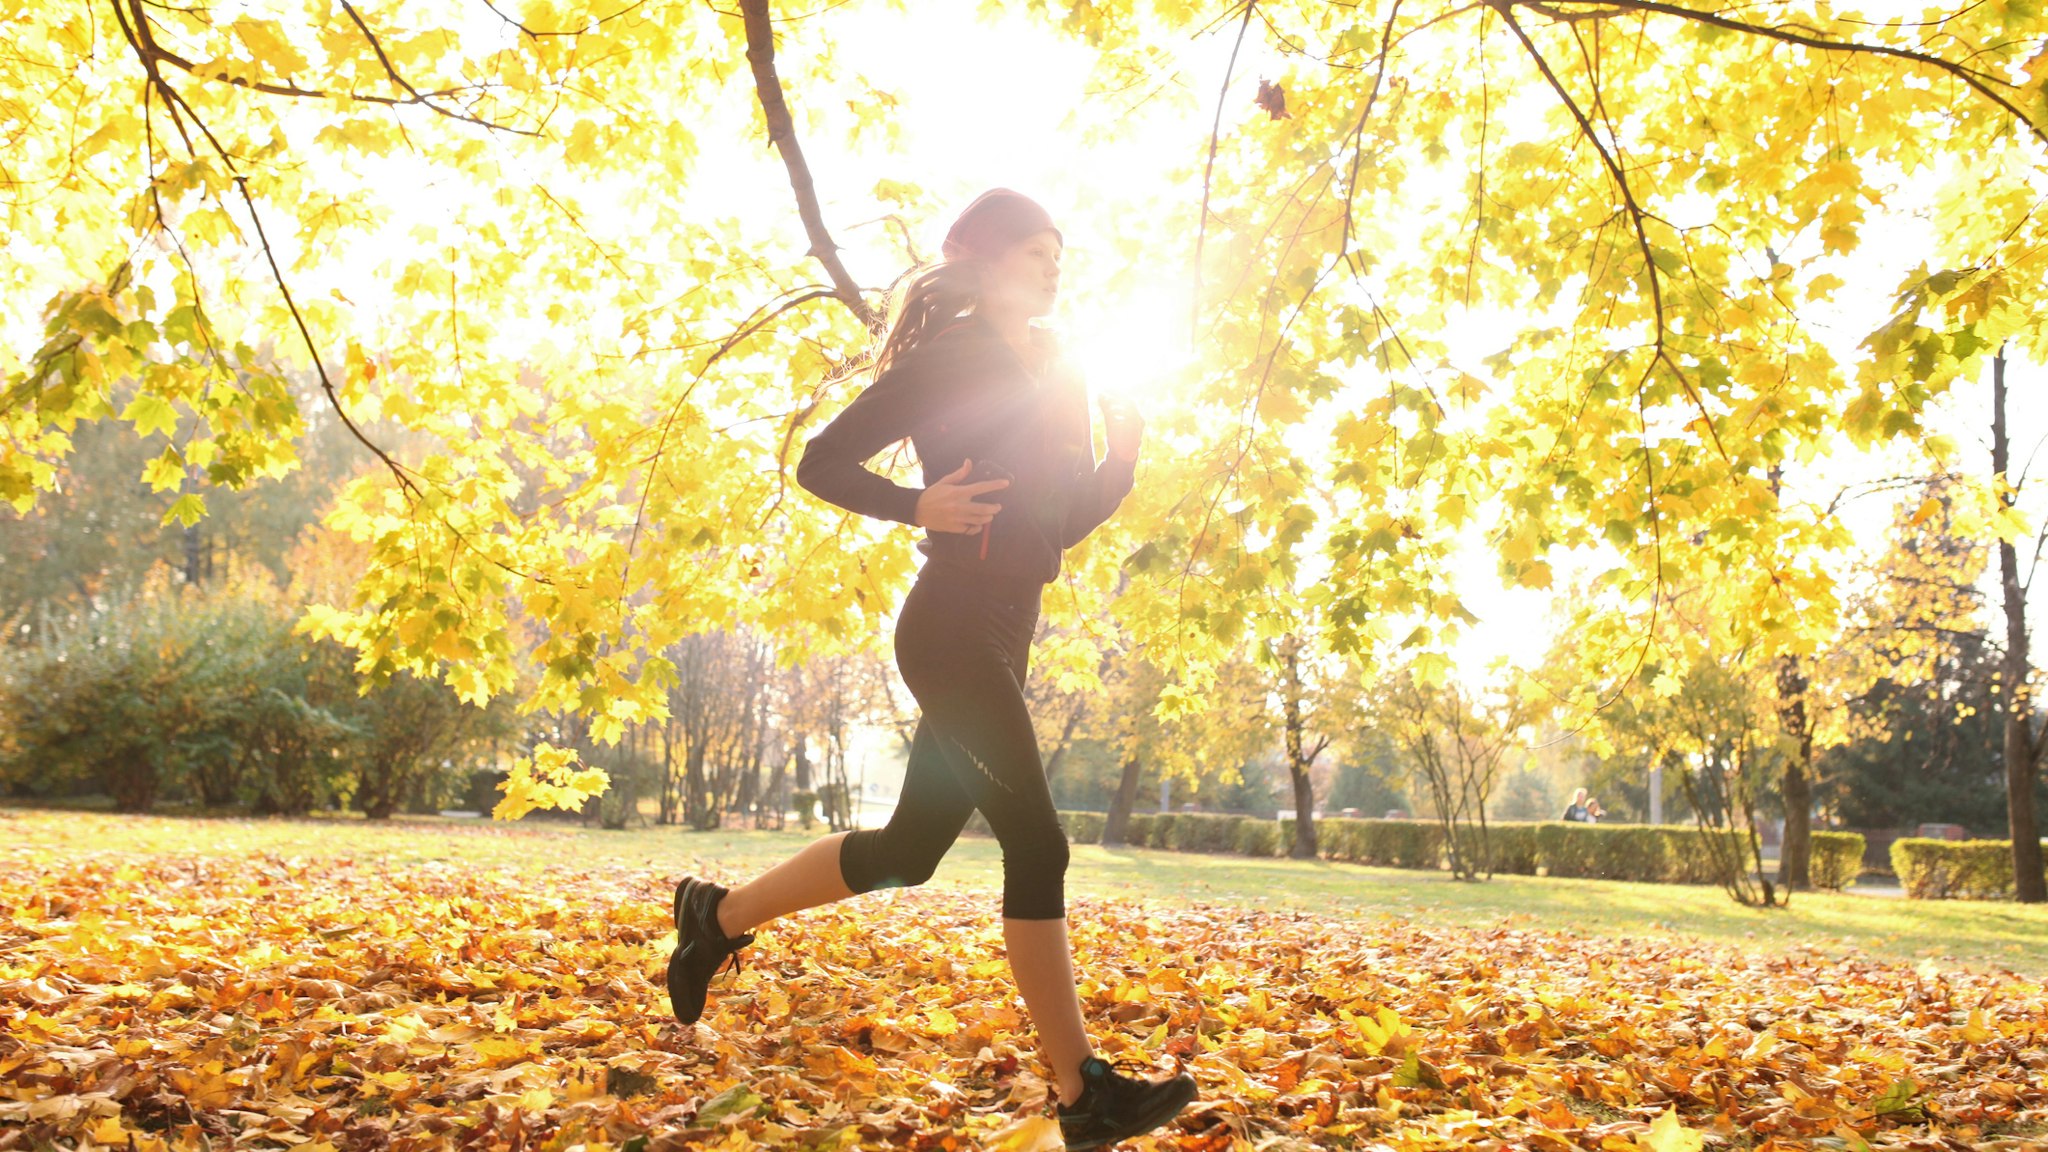 Female athlete on training run through fall leaves, city park